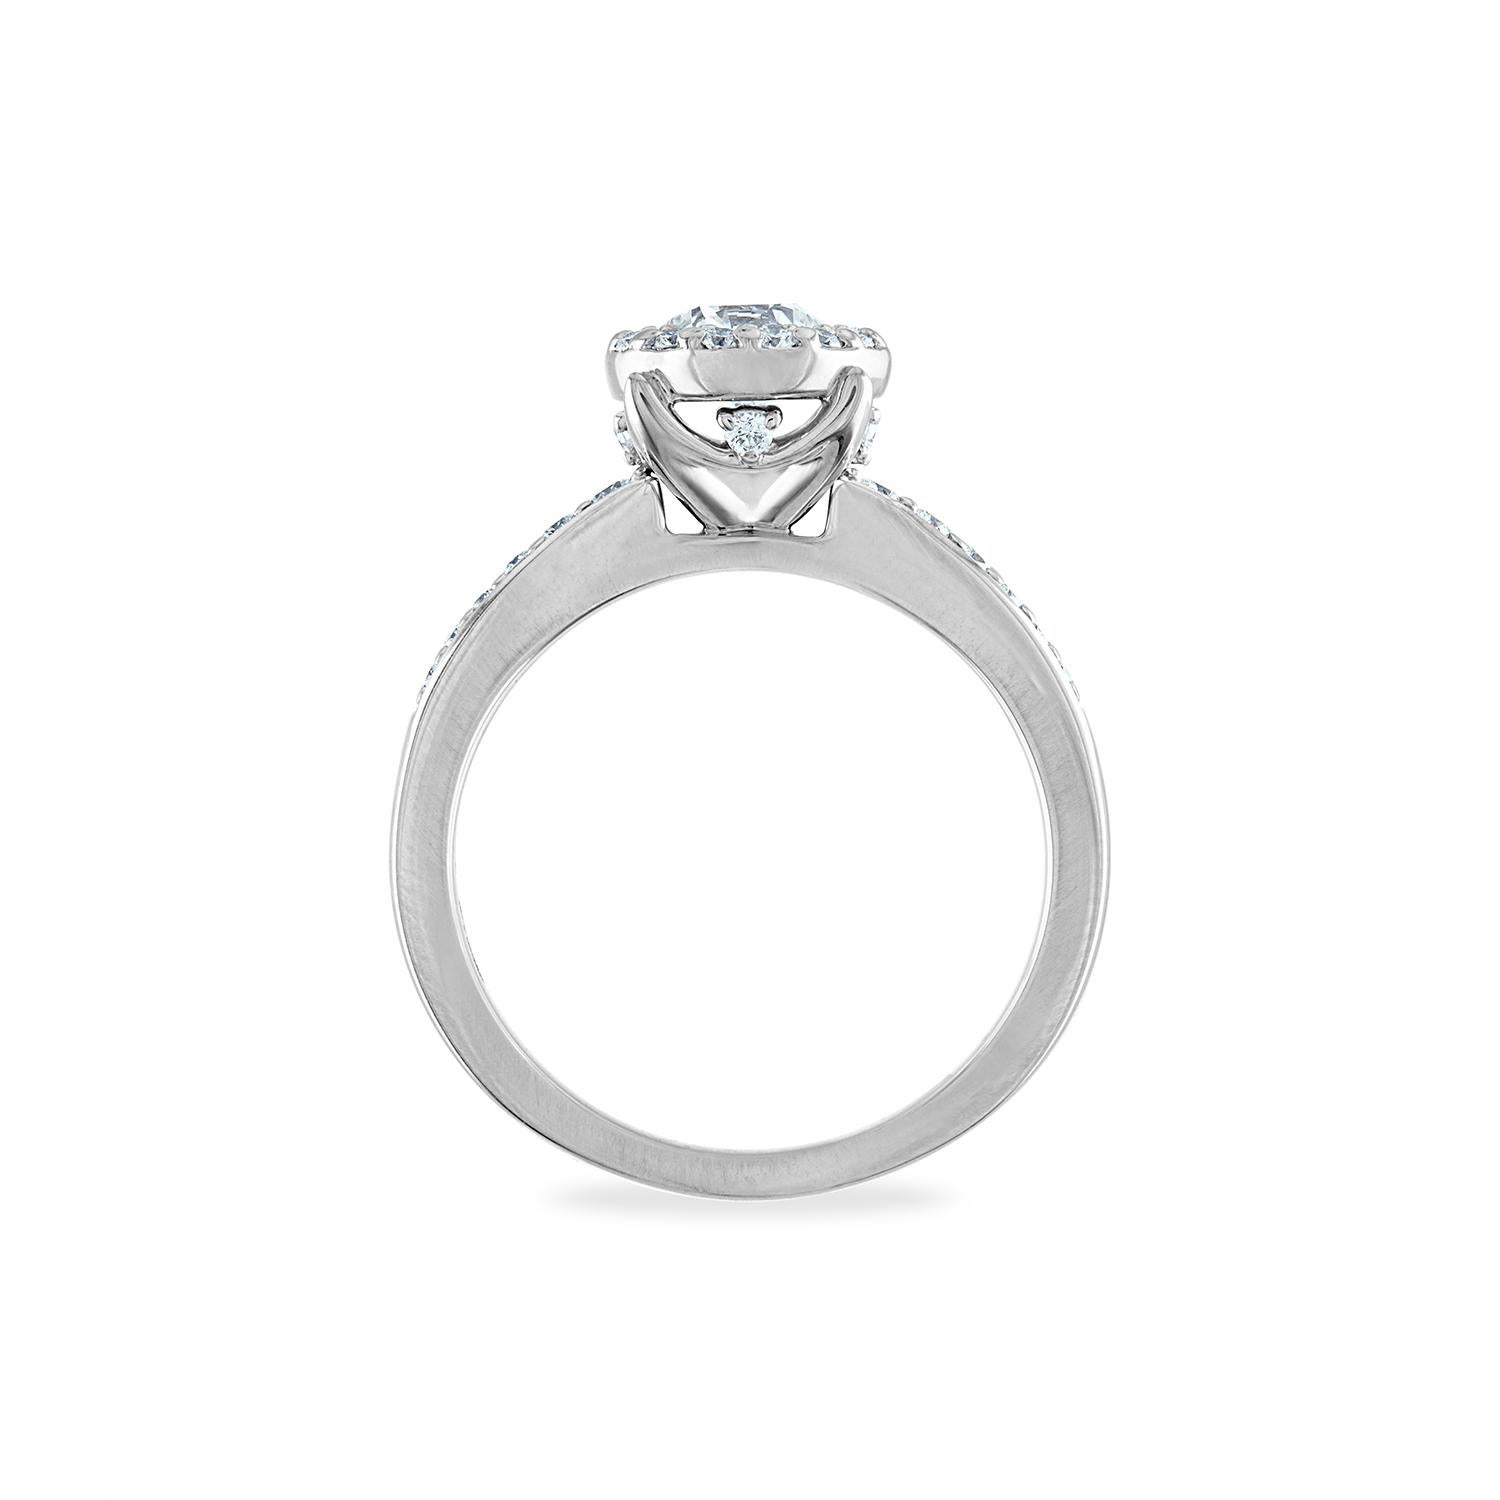 1 carat center stone halo engagement ring